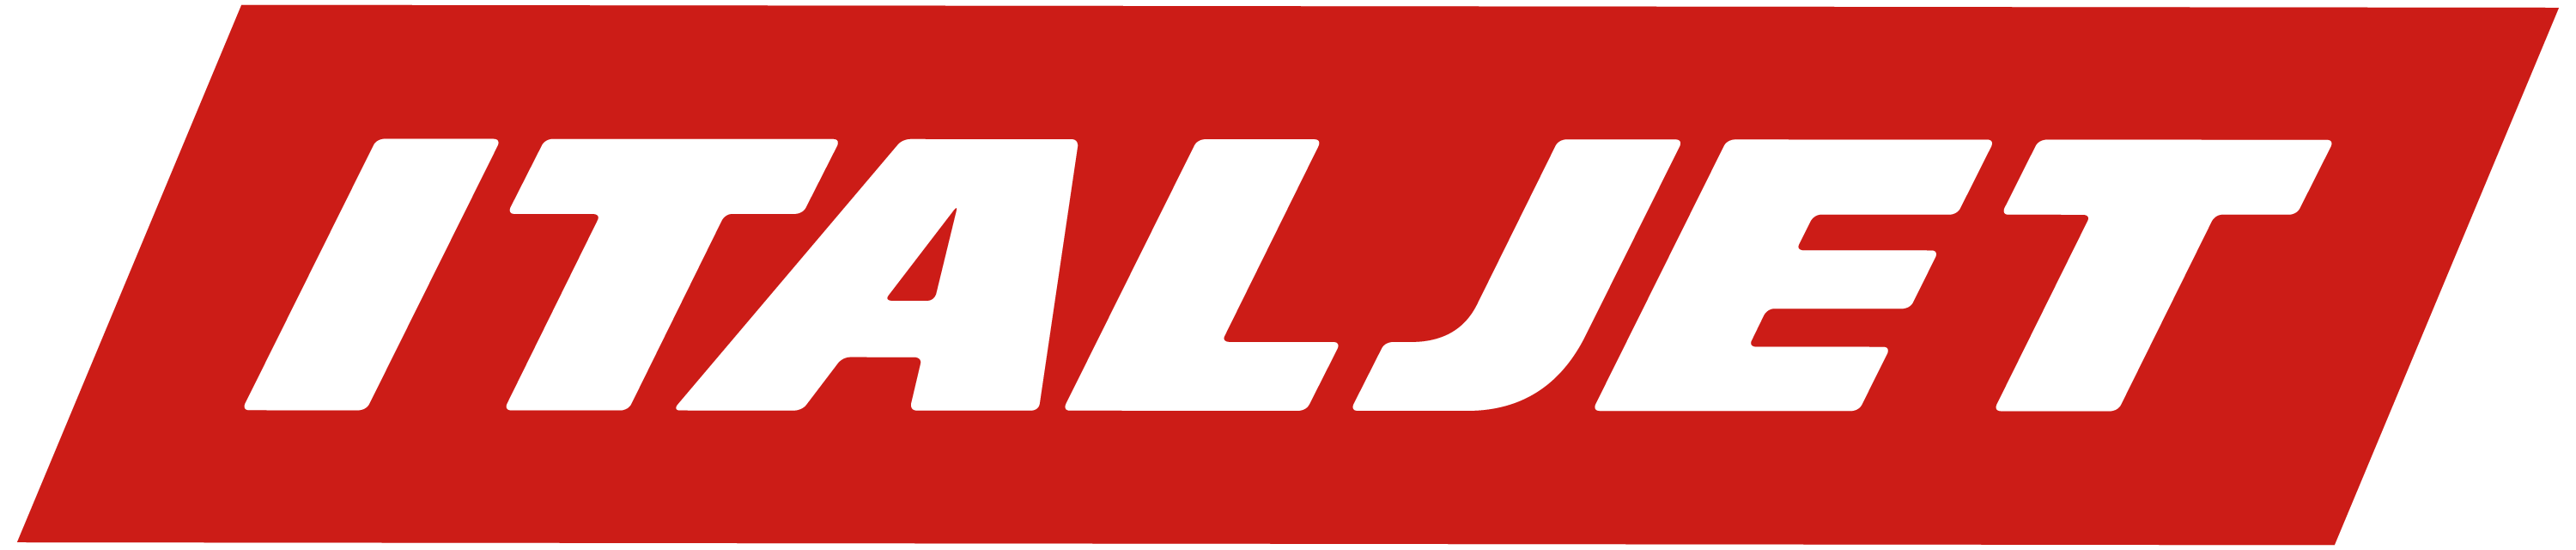 Italjet Logo 2020